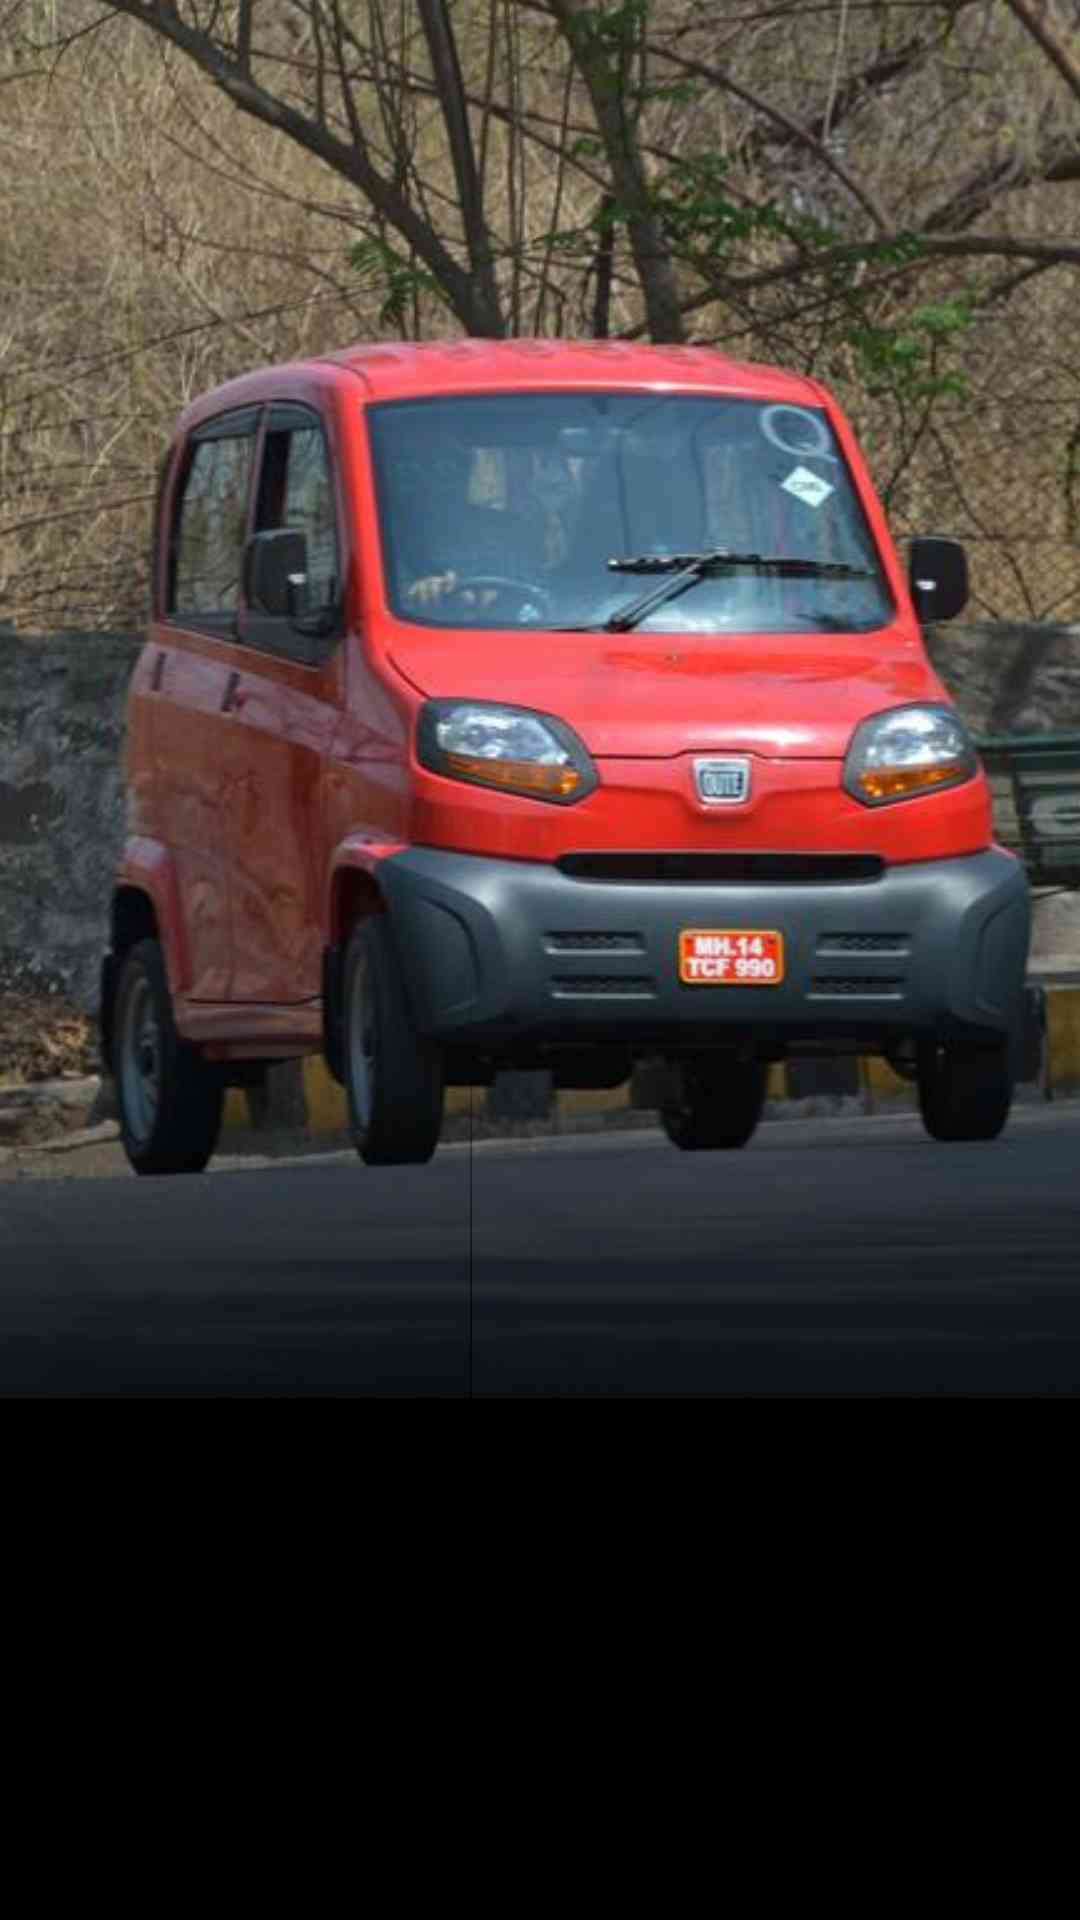 Bajaj Qute - India's First Auto Taxi